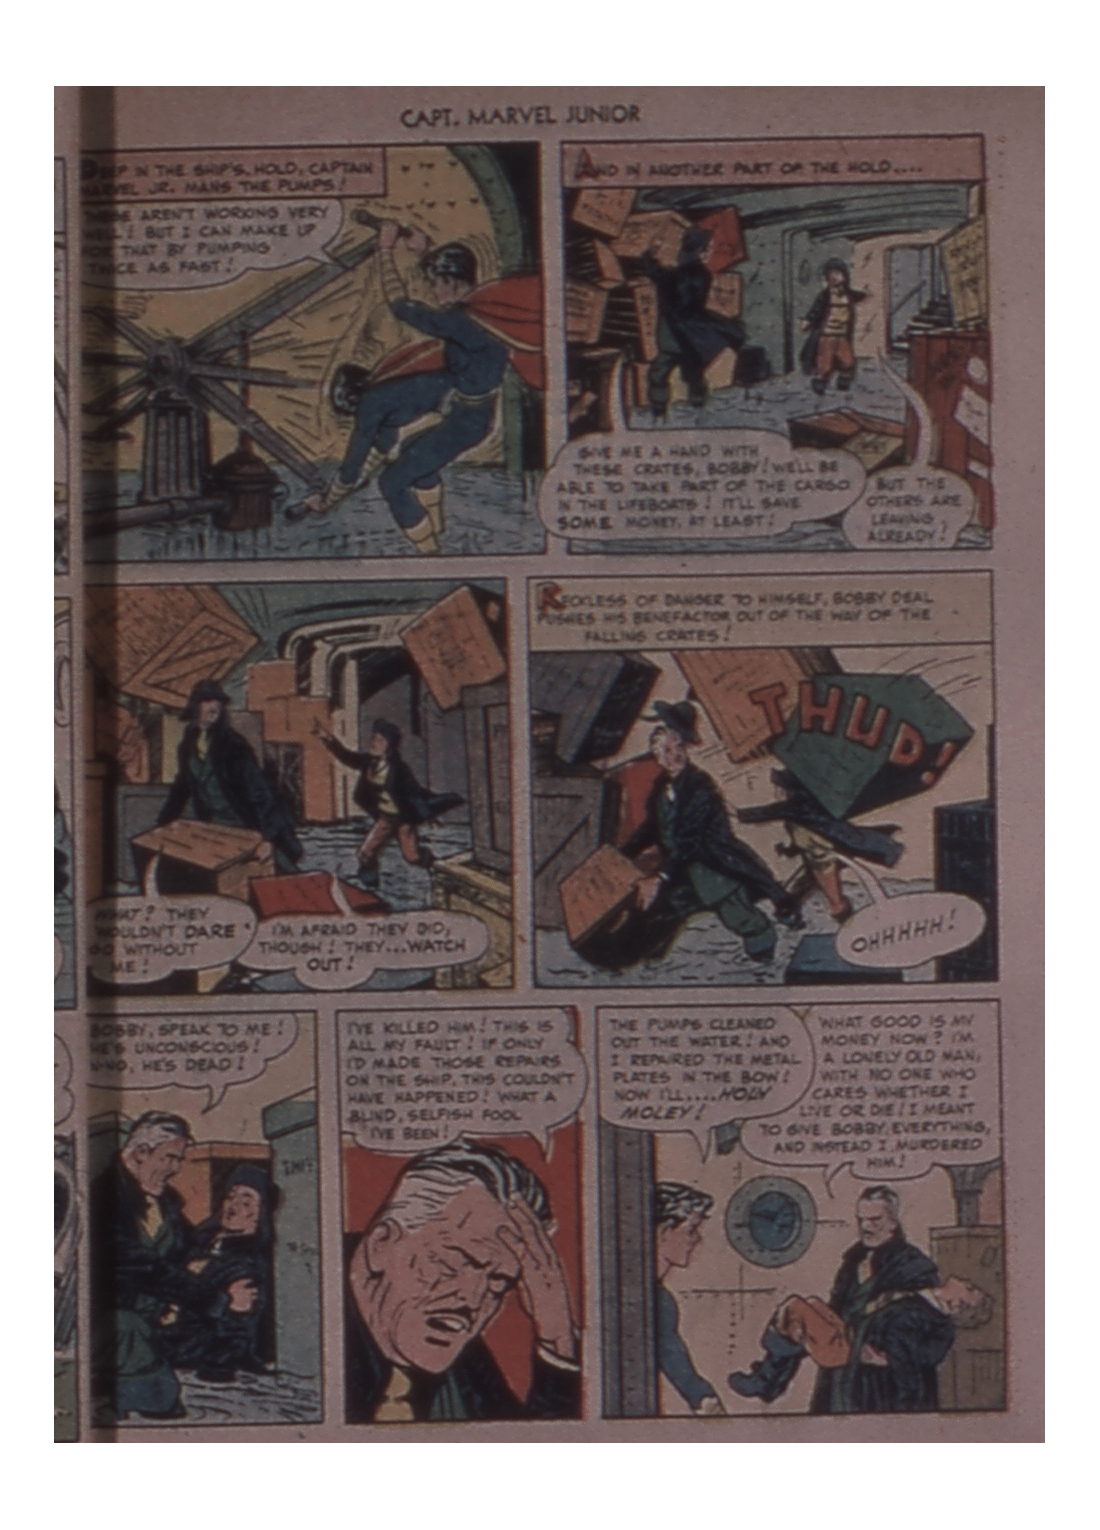 Read online Captain Marvel, Jr. comic -  Issue #77 - 49